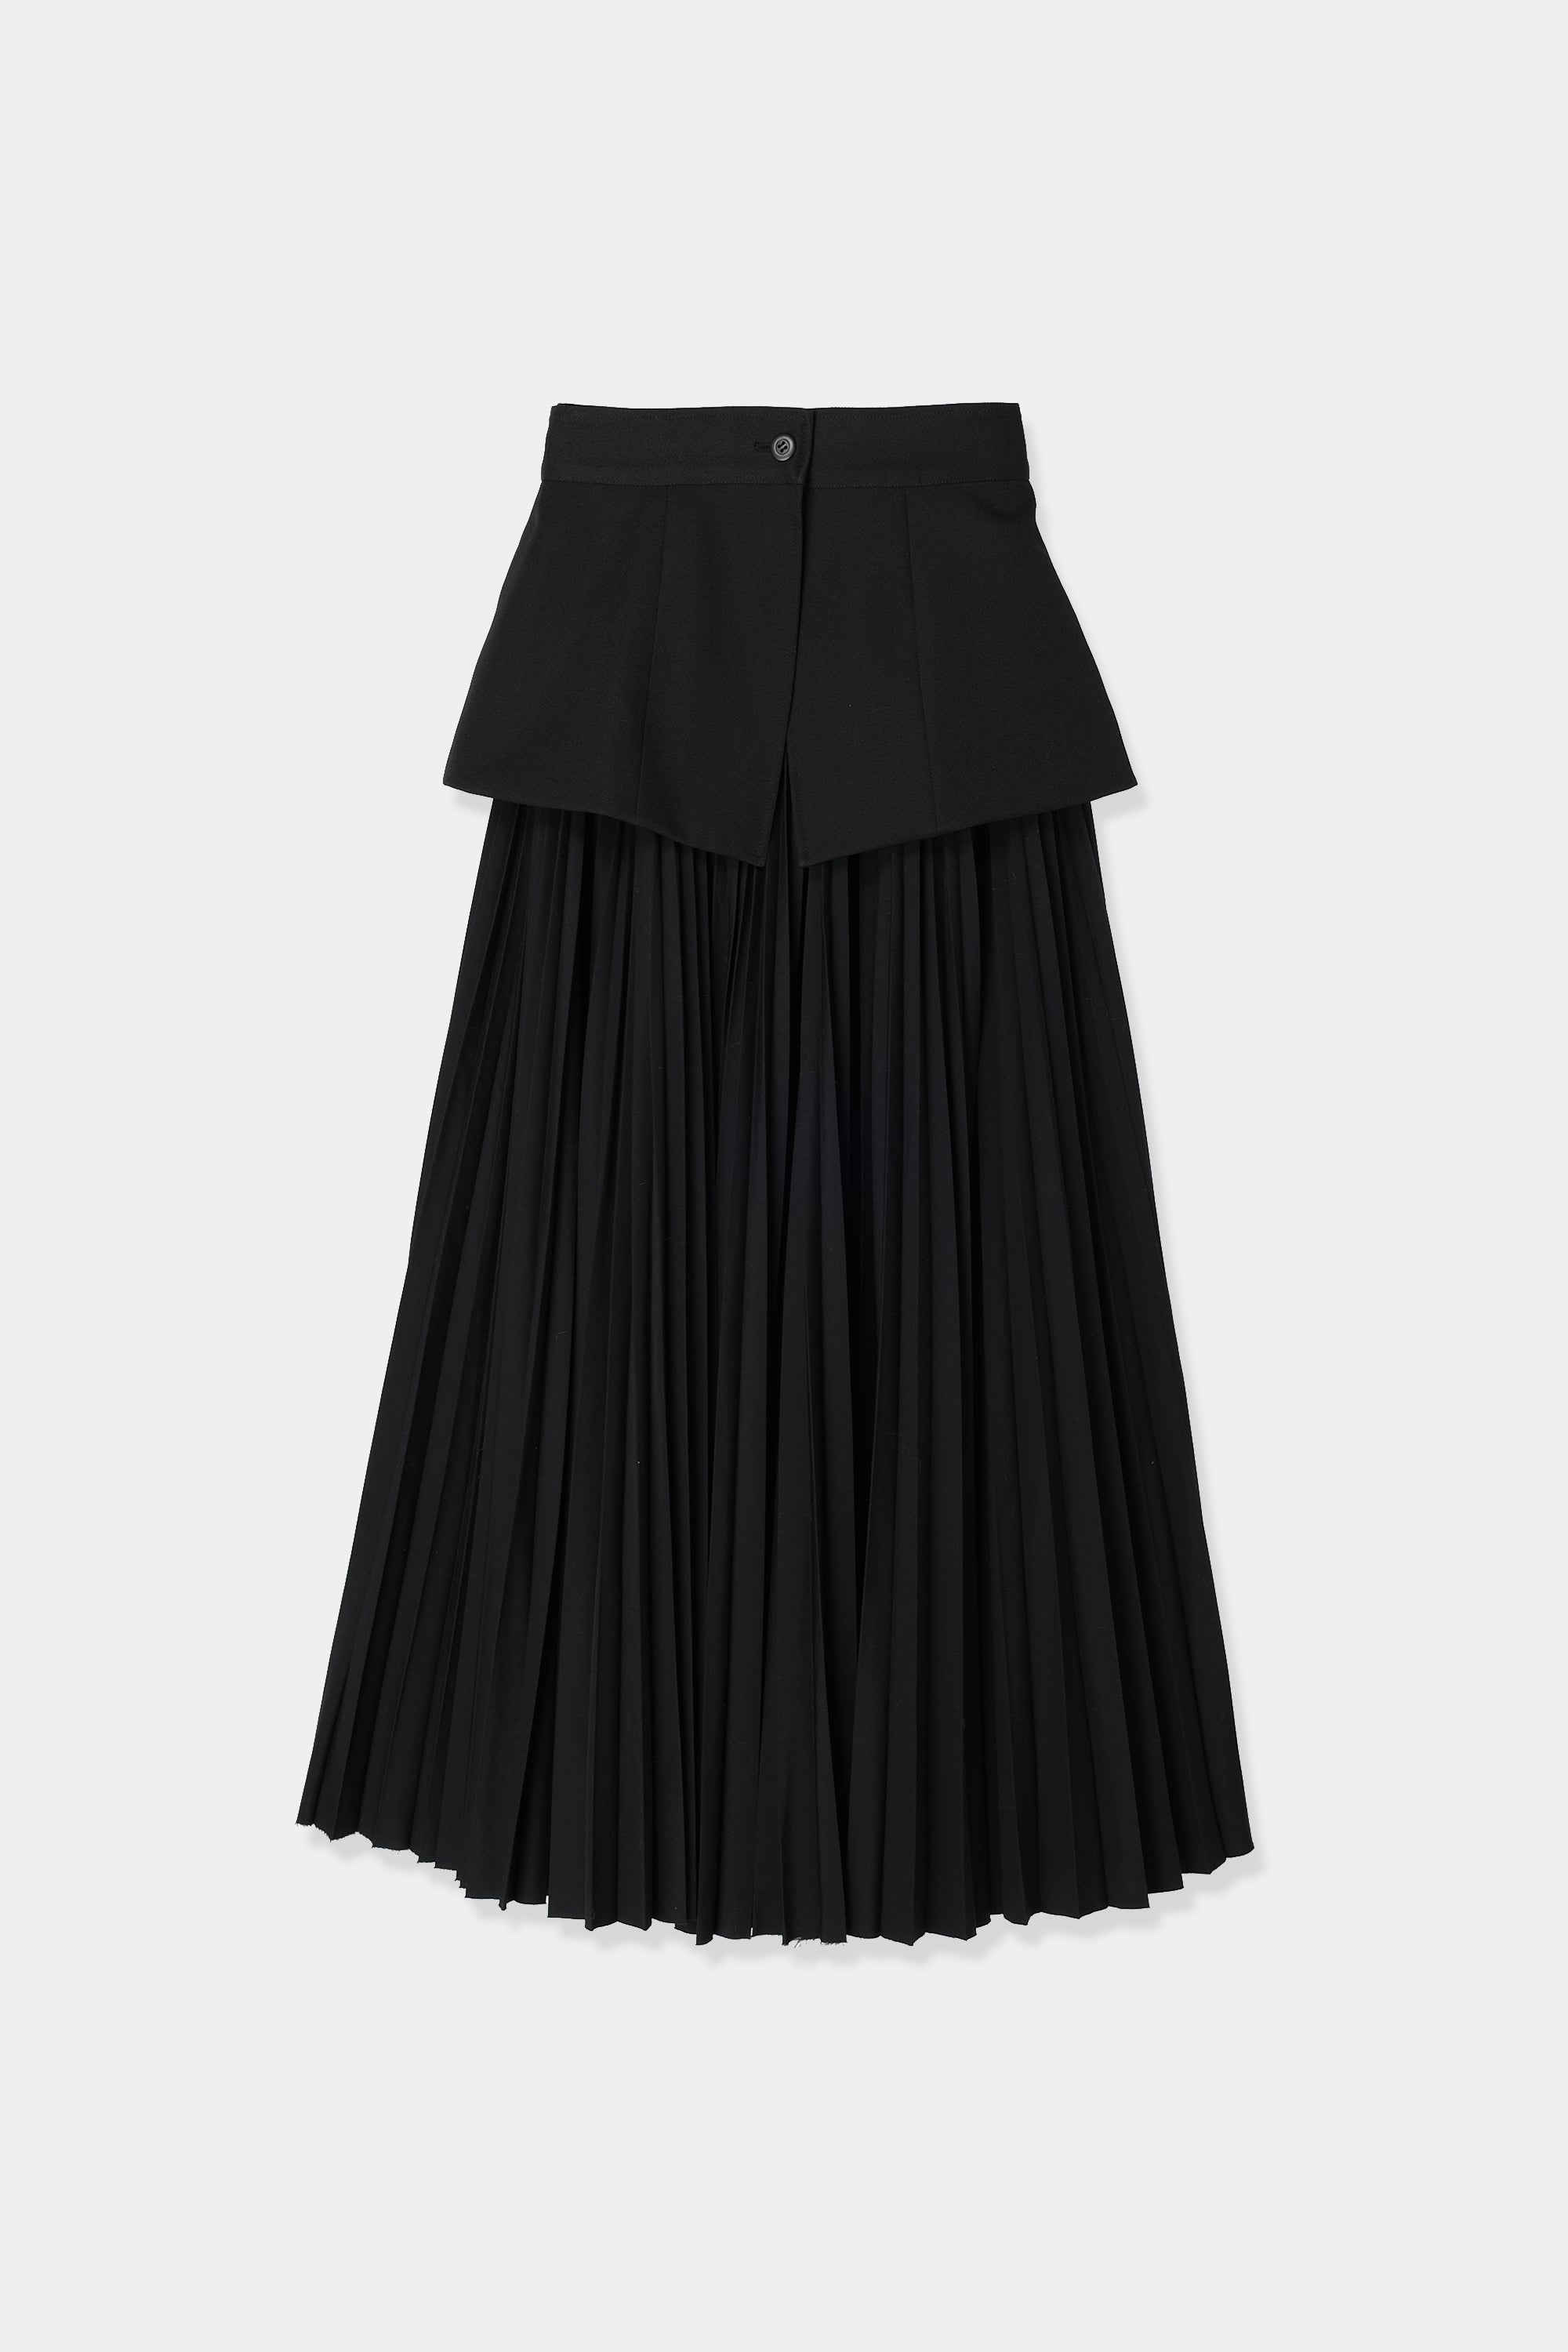 2020最新型 高品質 Black pleats skirt - 通販 - etheriawellness.com